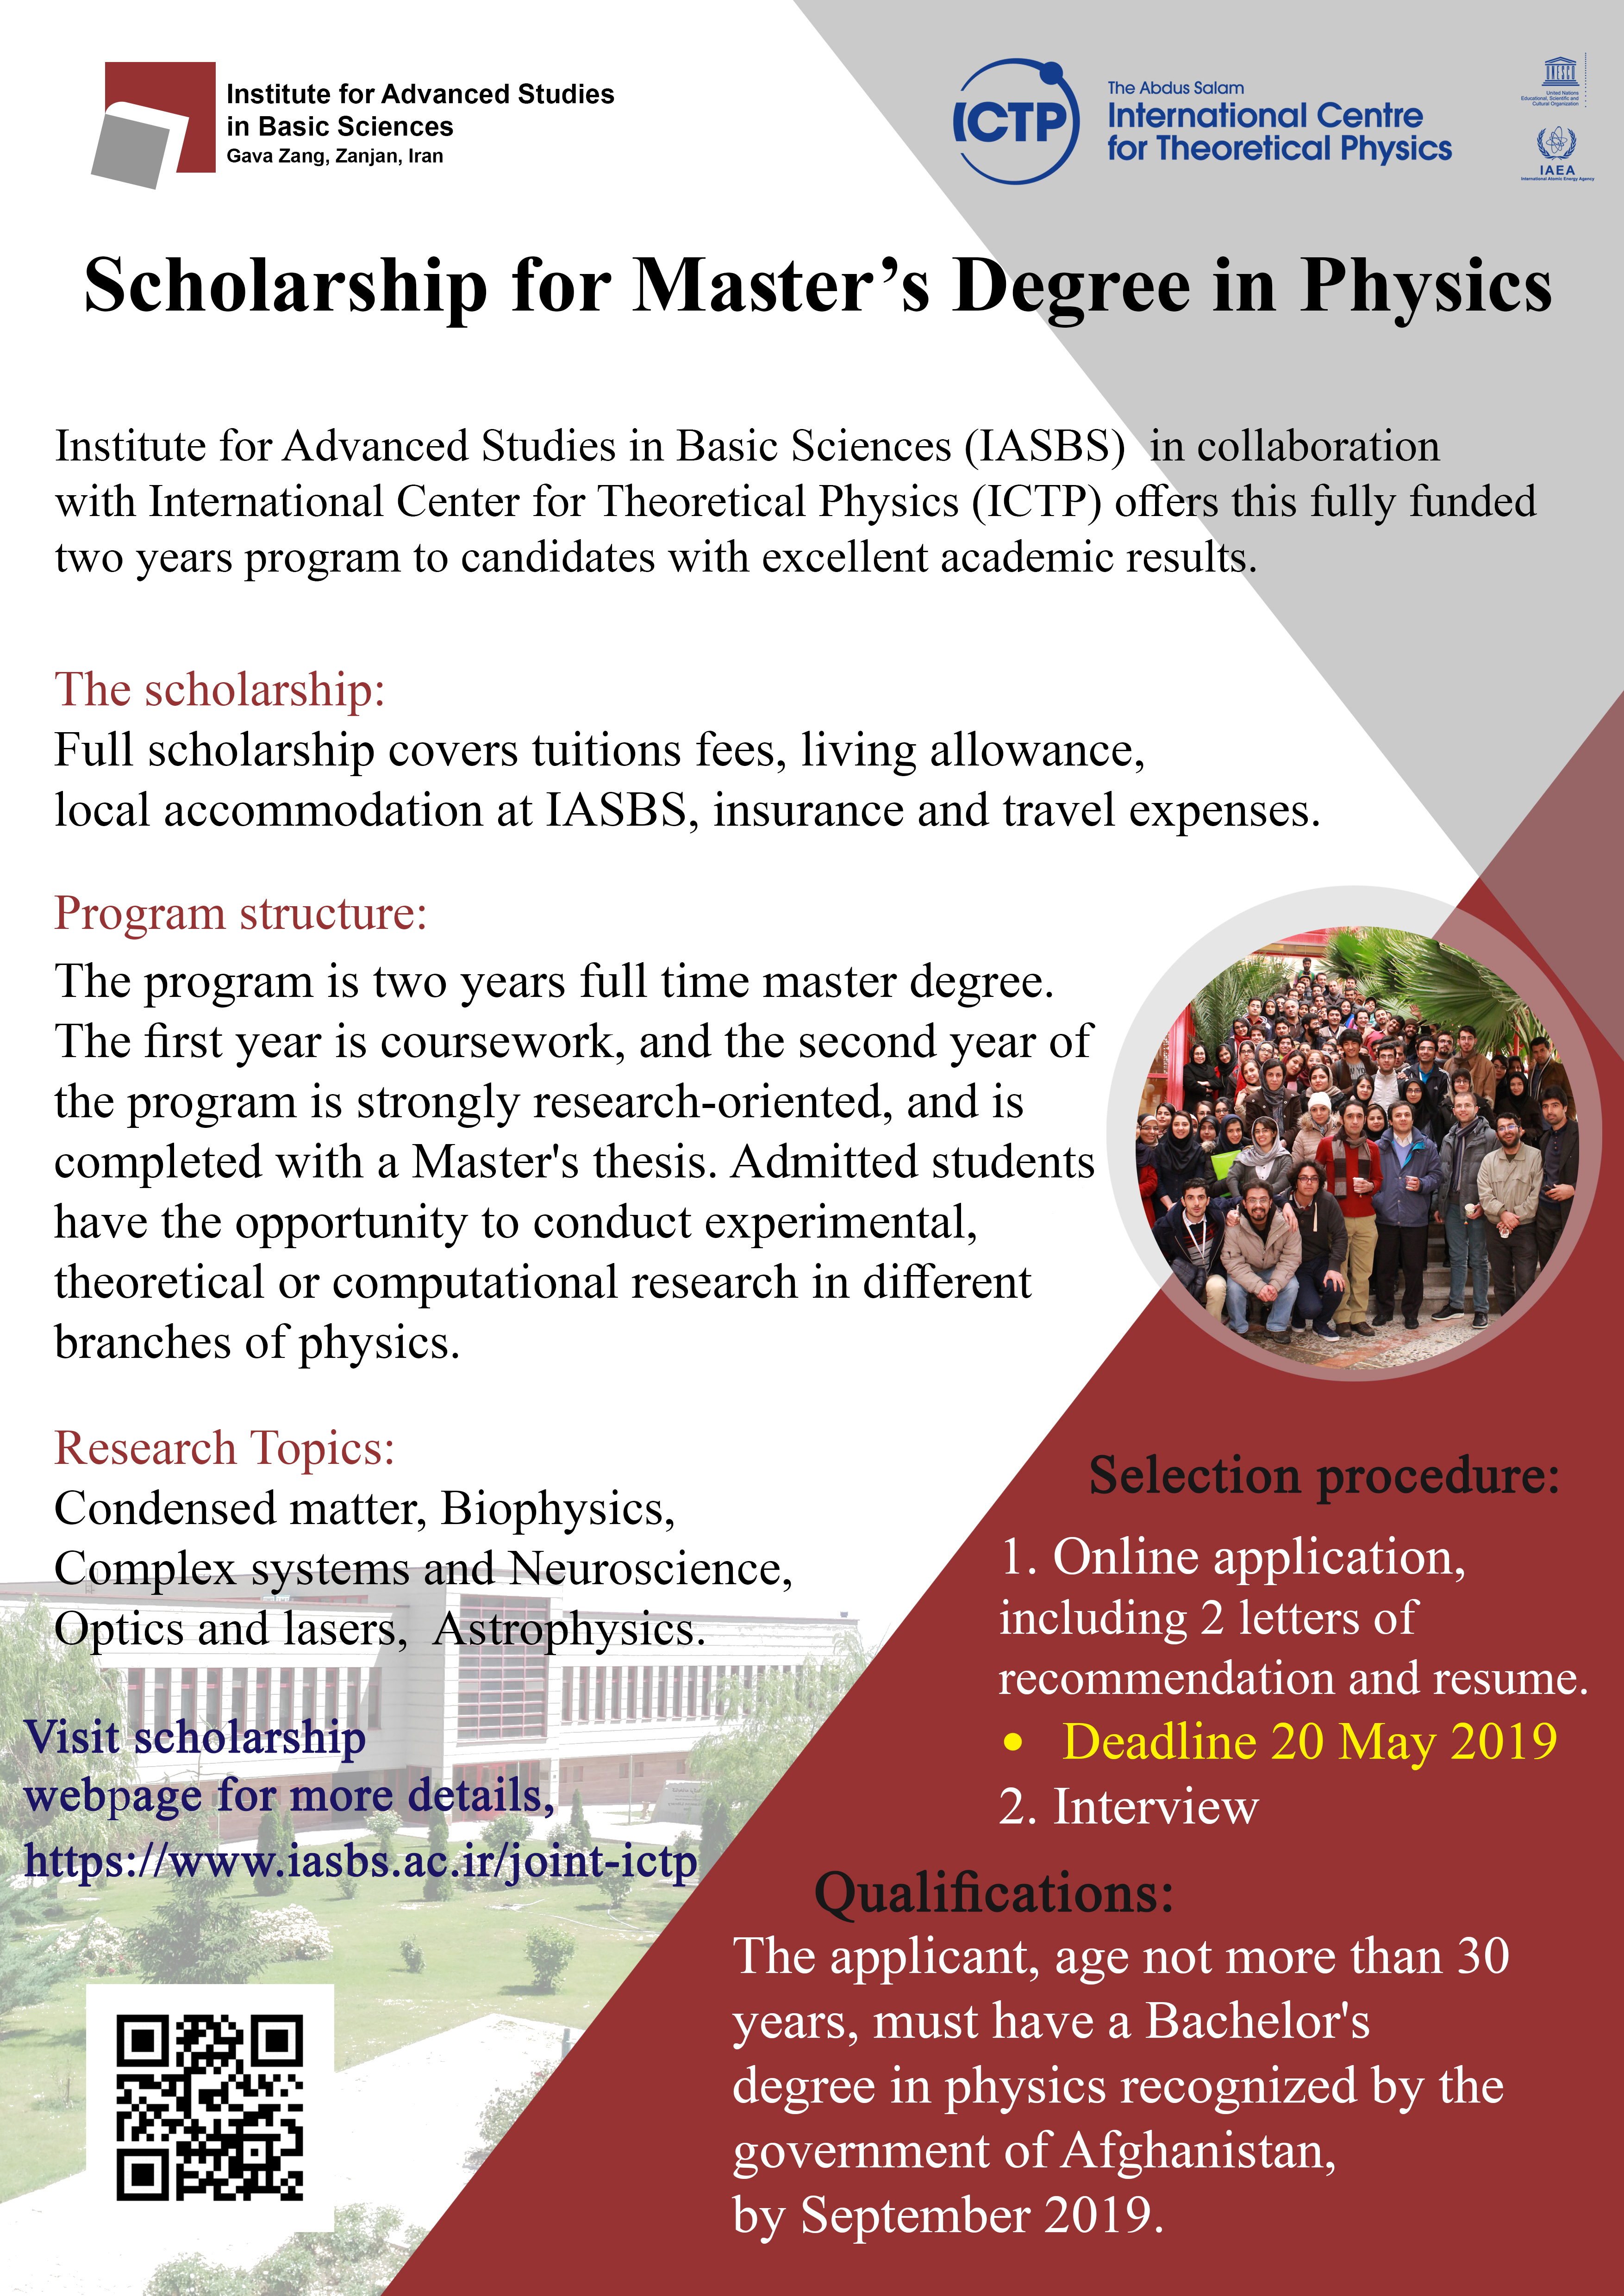 IASBS-ICTP Scholarship for Master's Program in Physics